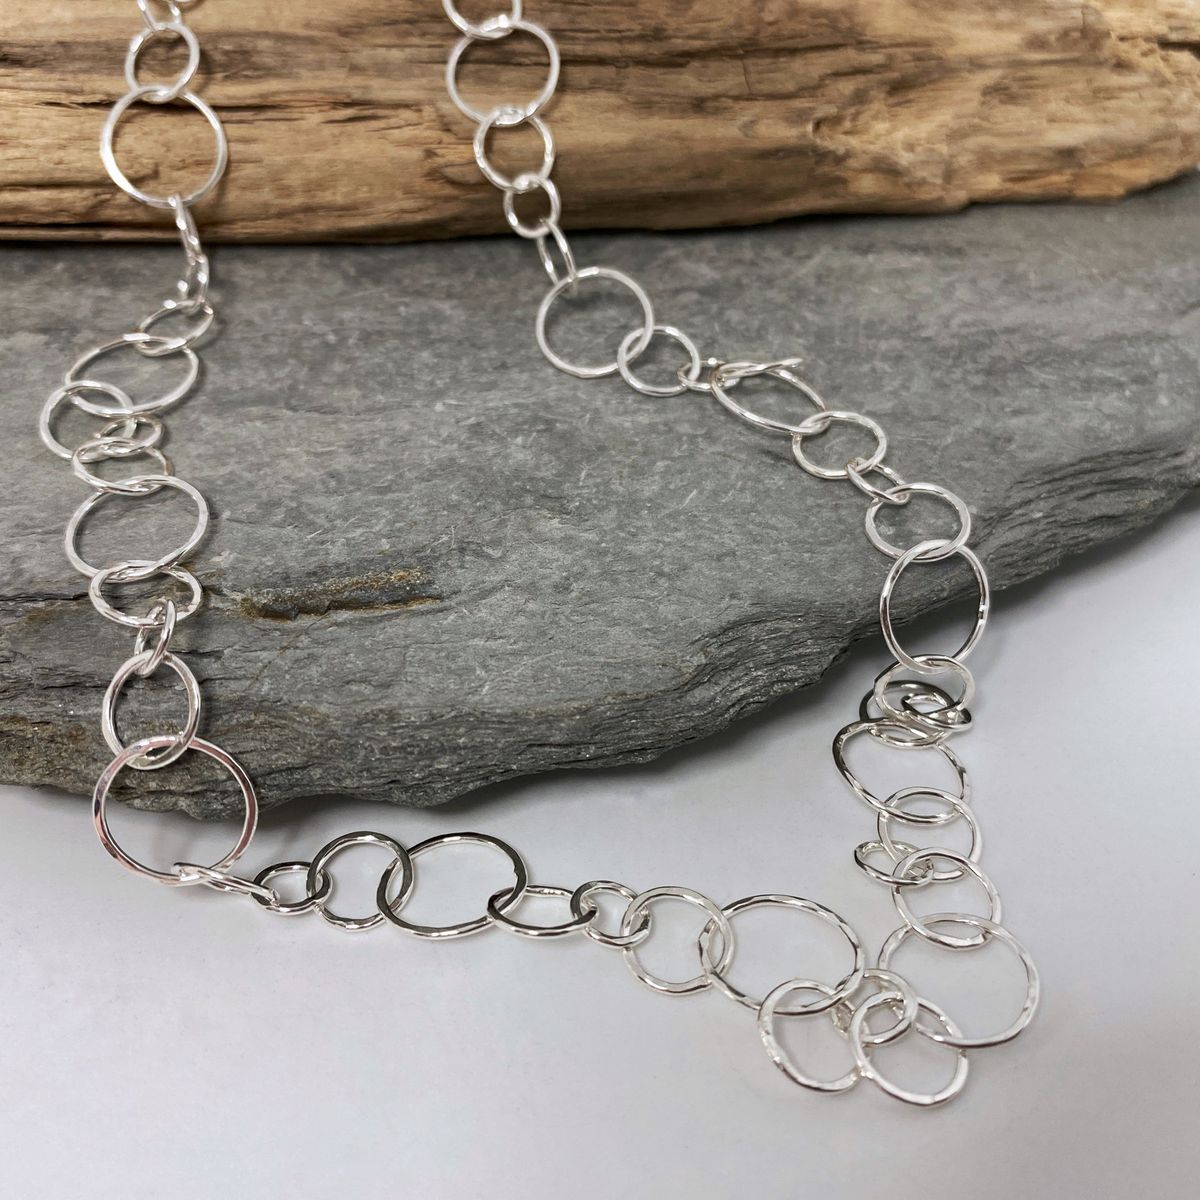 Delicate chain necklace